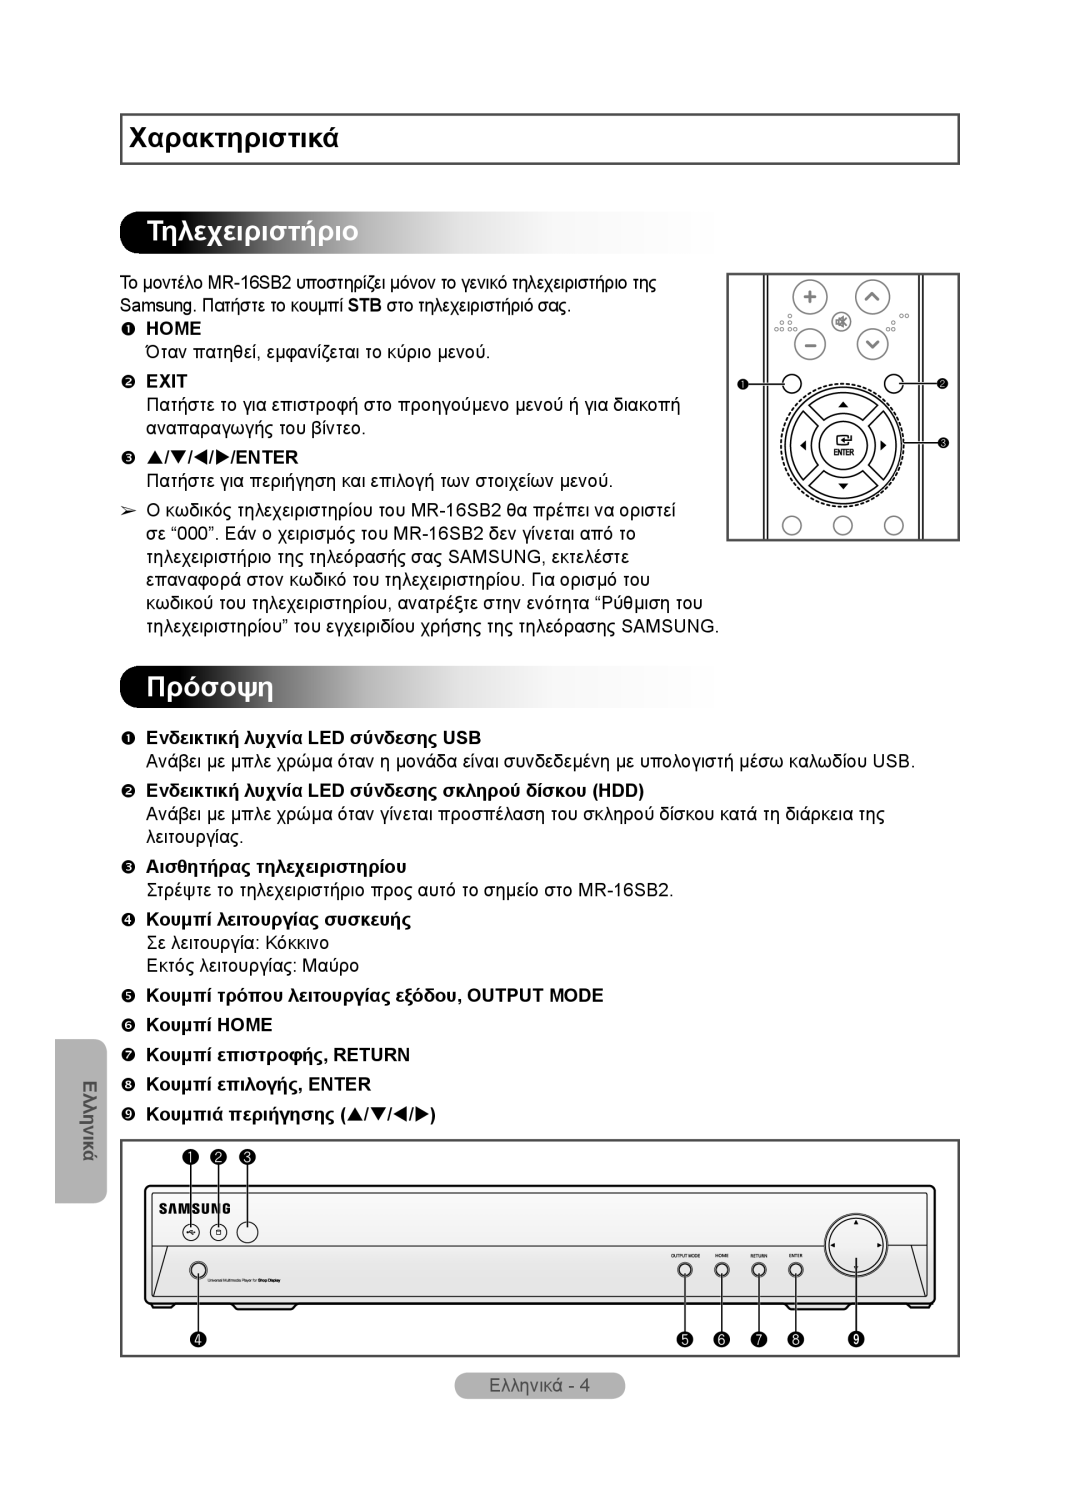 Samsung MR-16SB2 Τηλεχειριστήριο, Πρόσοψη,  / / / /Enter,  Ενδεικτική λυχνία LED σύνδεσης USB,  Κουμπί HOME,  Home 